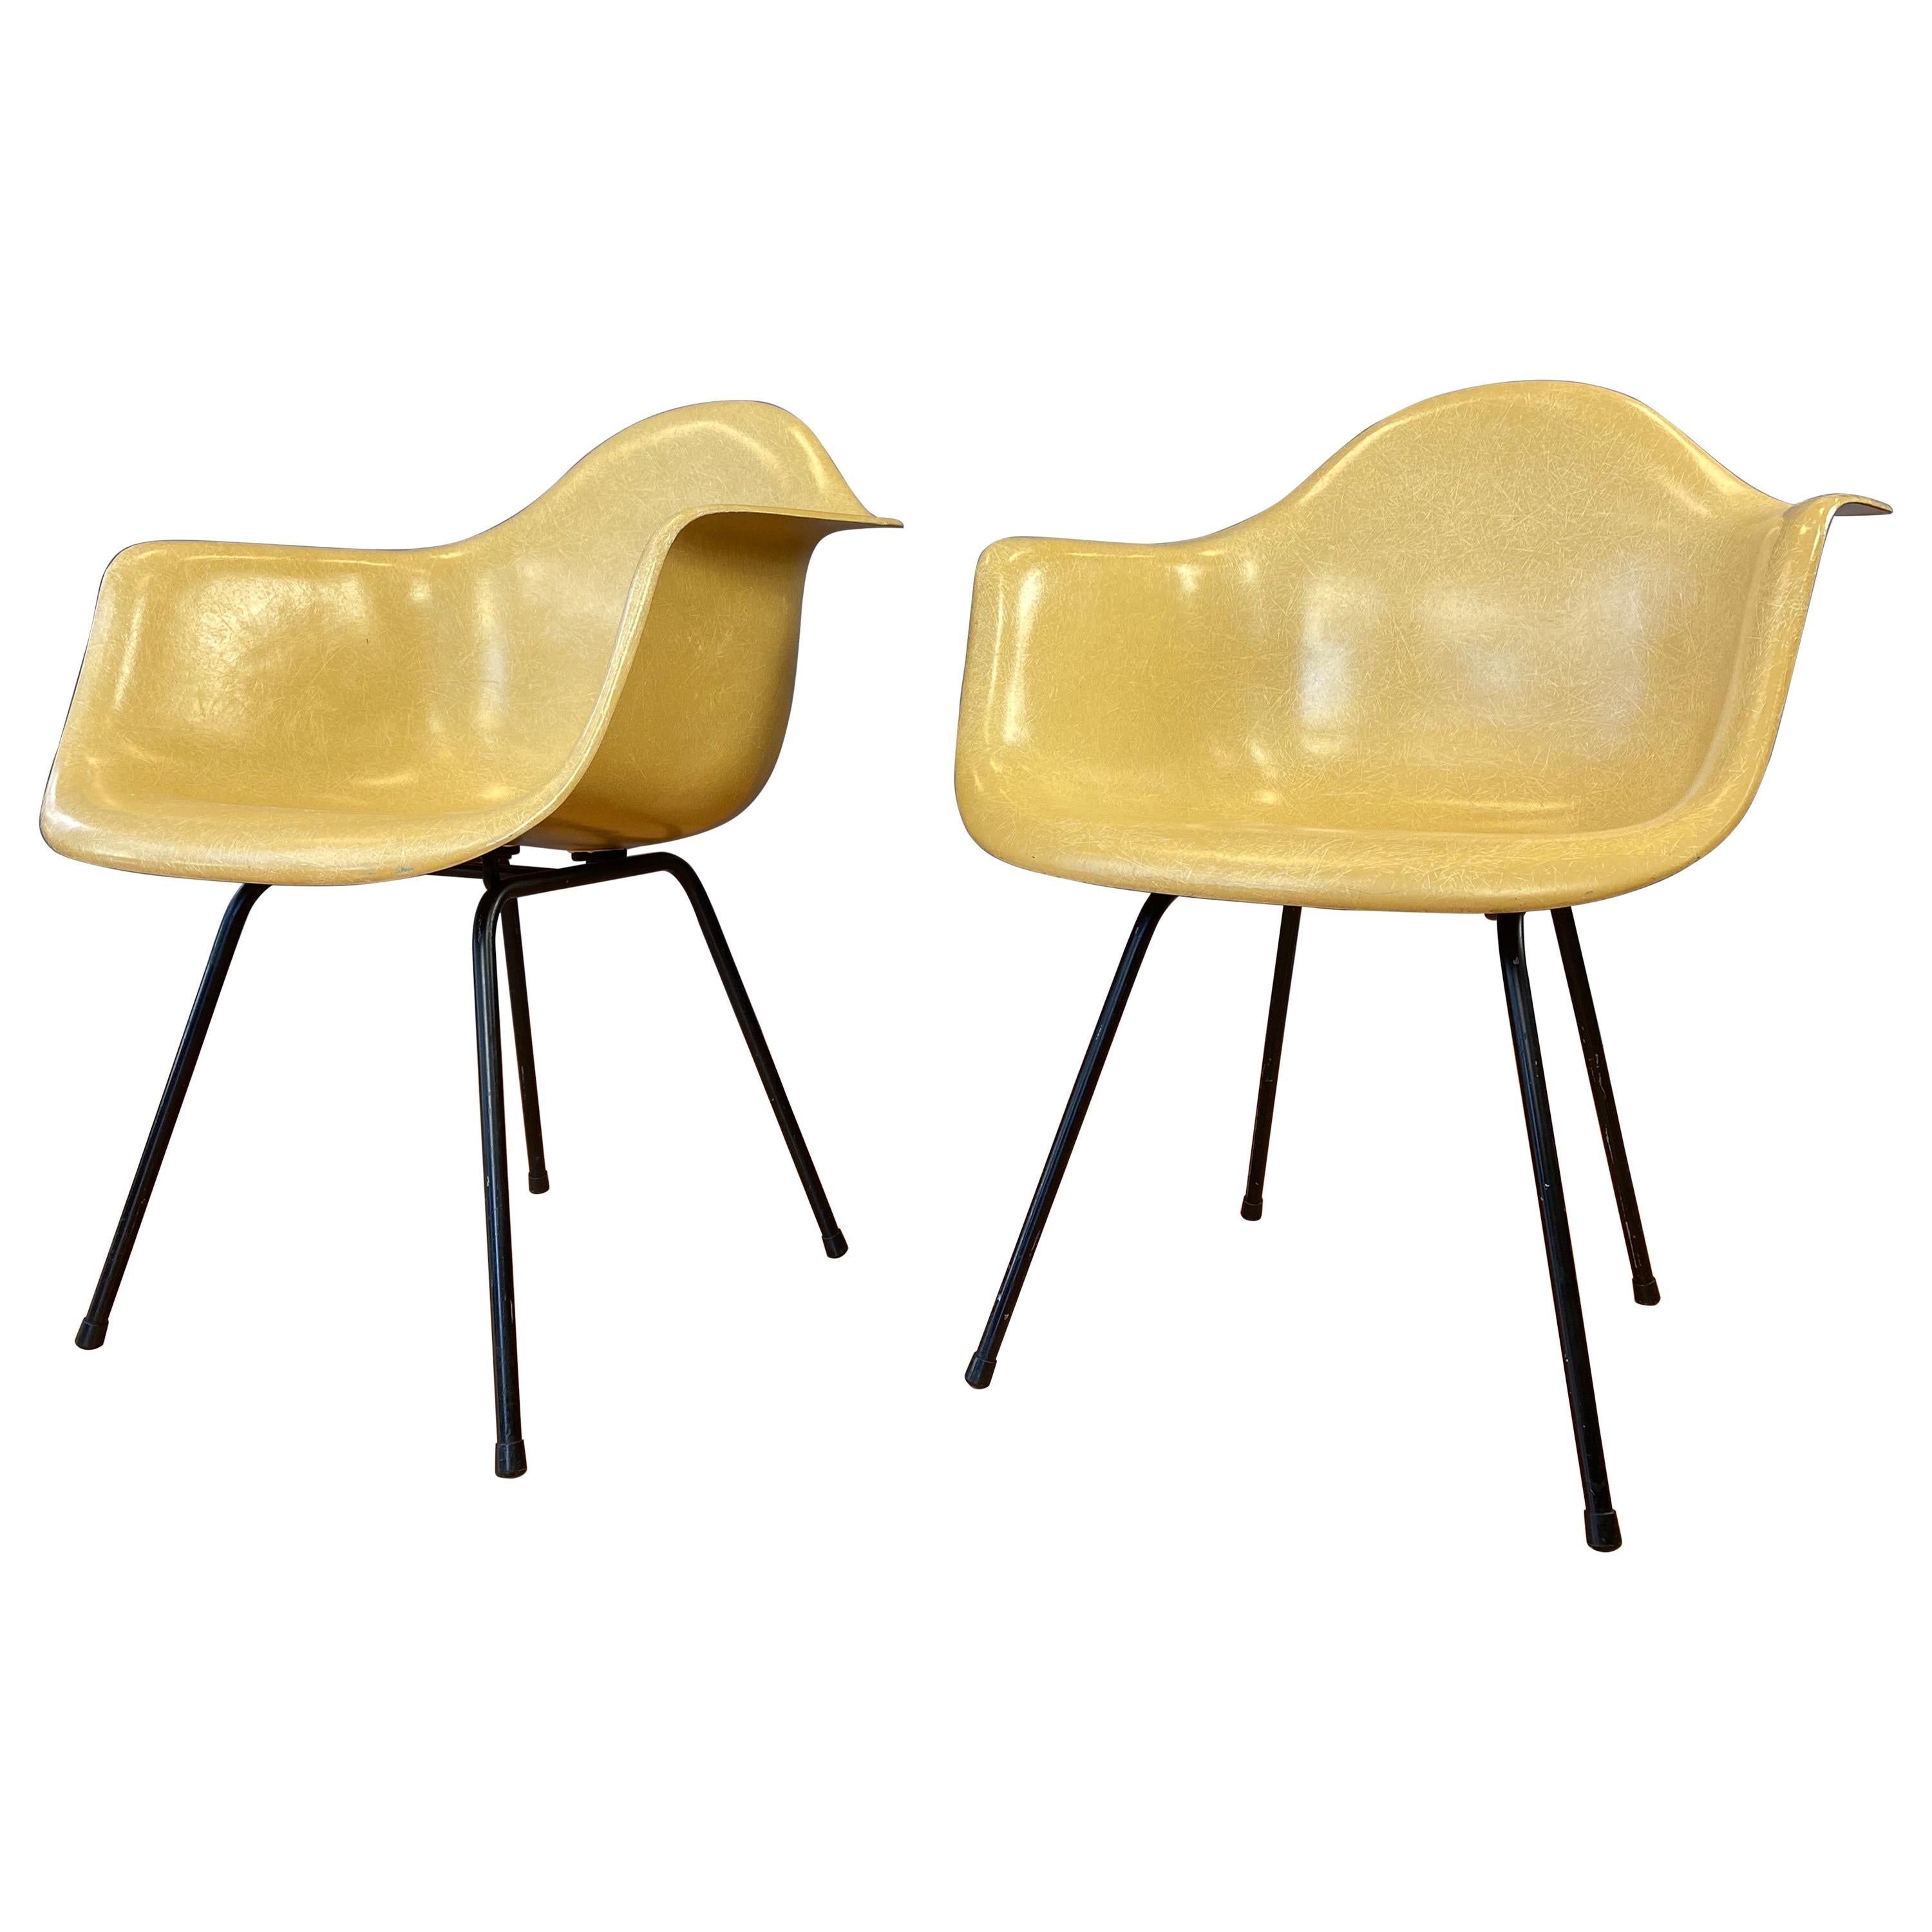 Pair of circa 1960s Charles Eames Fiberglass Shell Armchair for Herman Miller